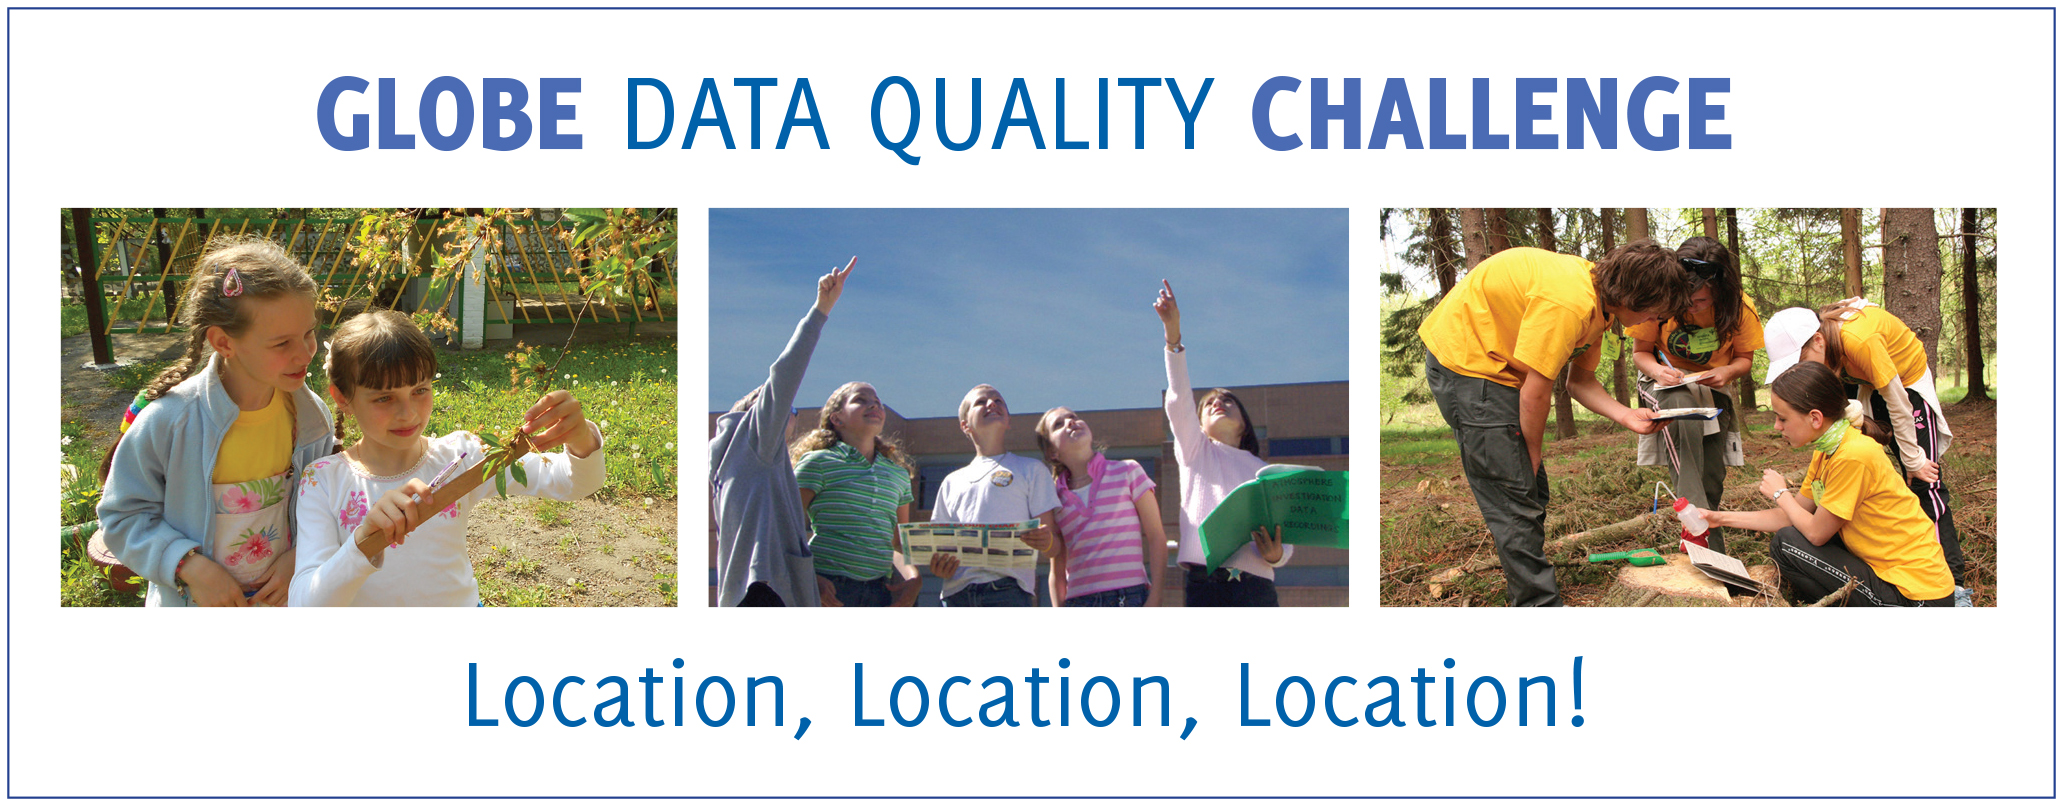 Data Quality Challenge 2016 Banner